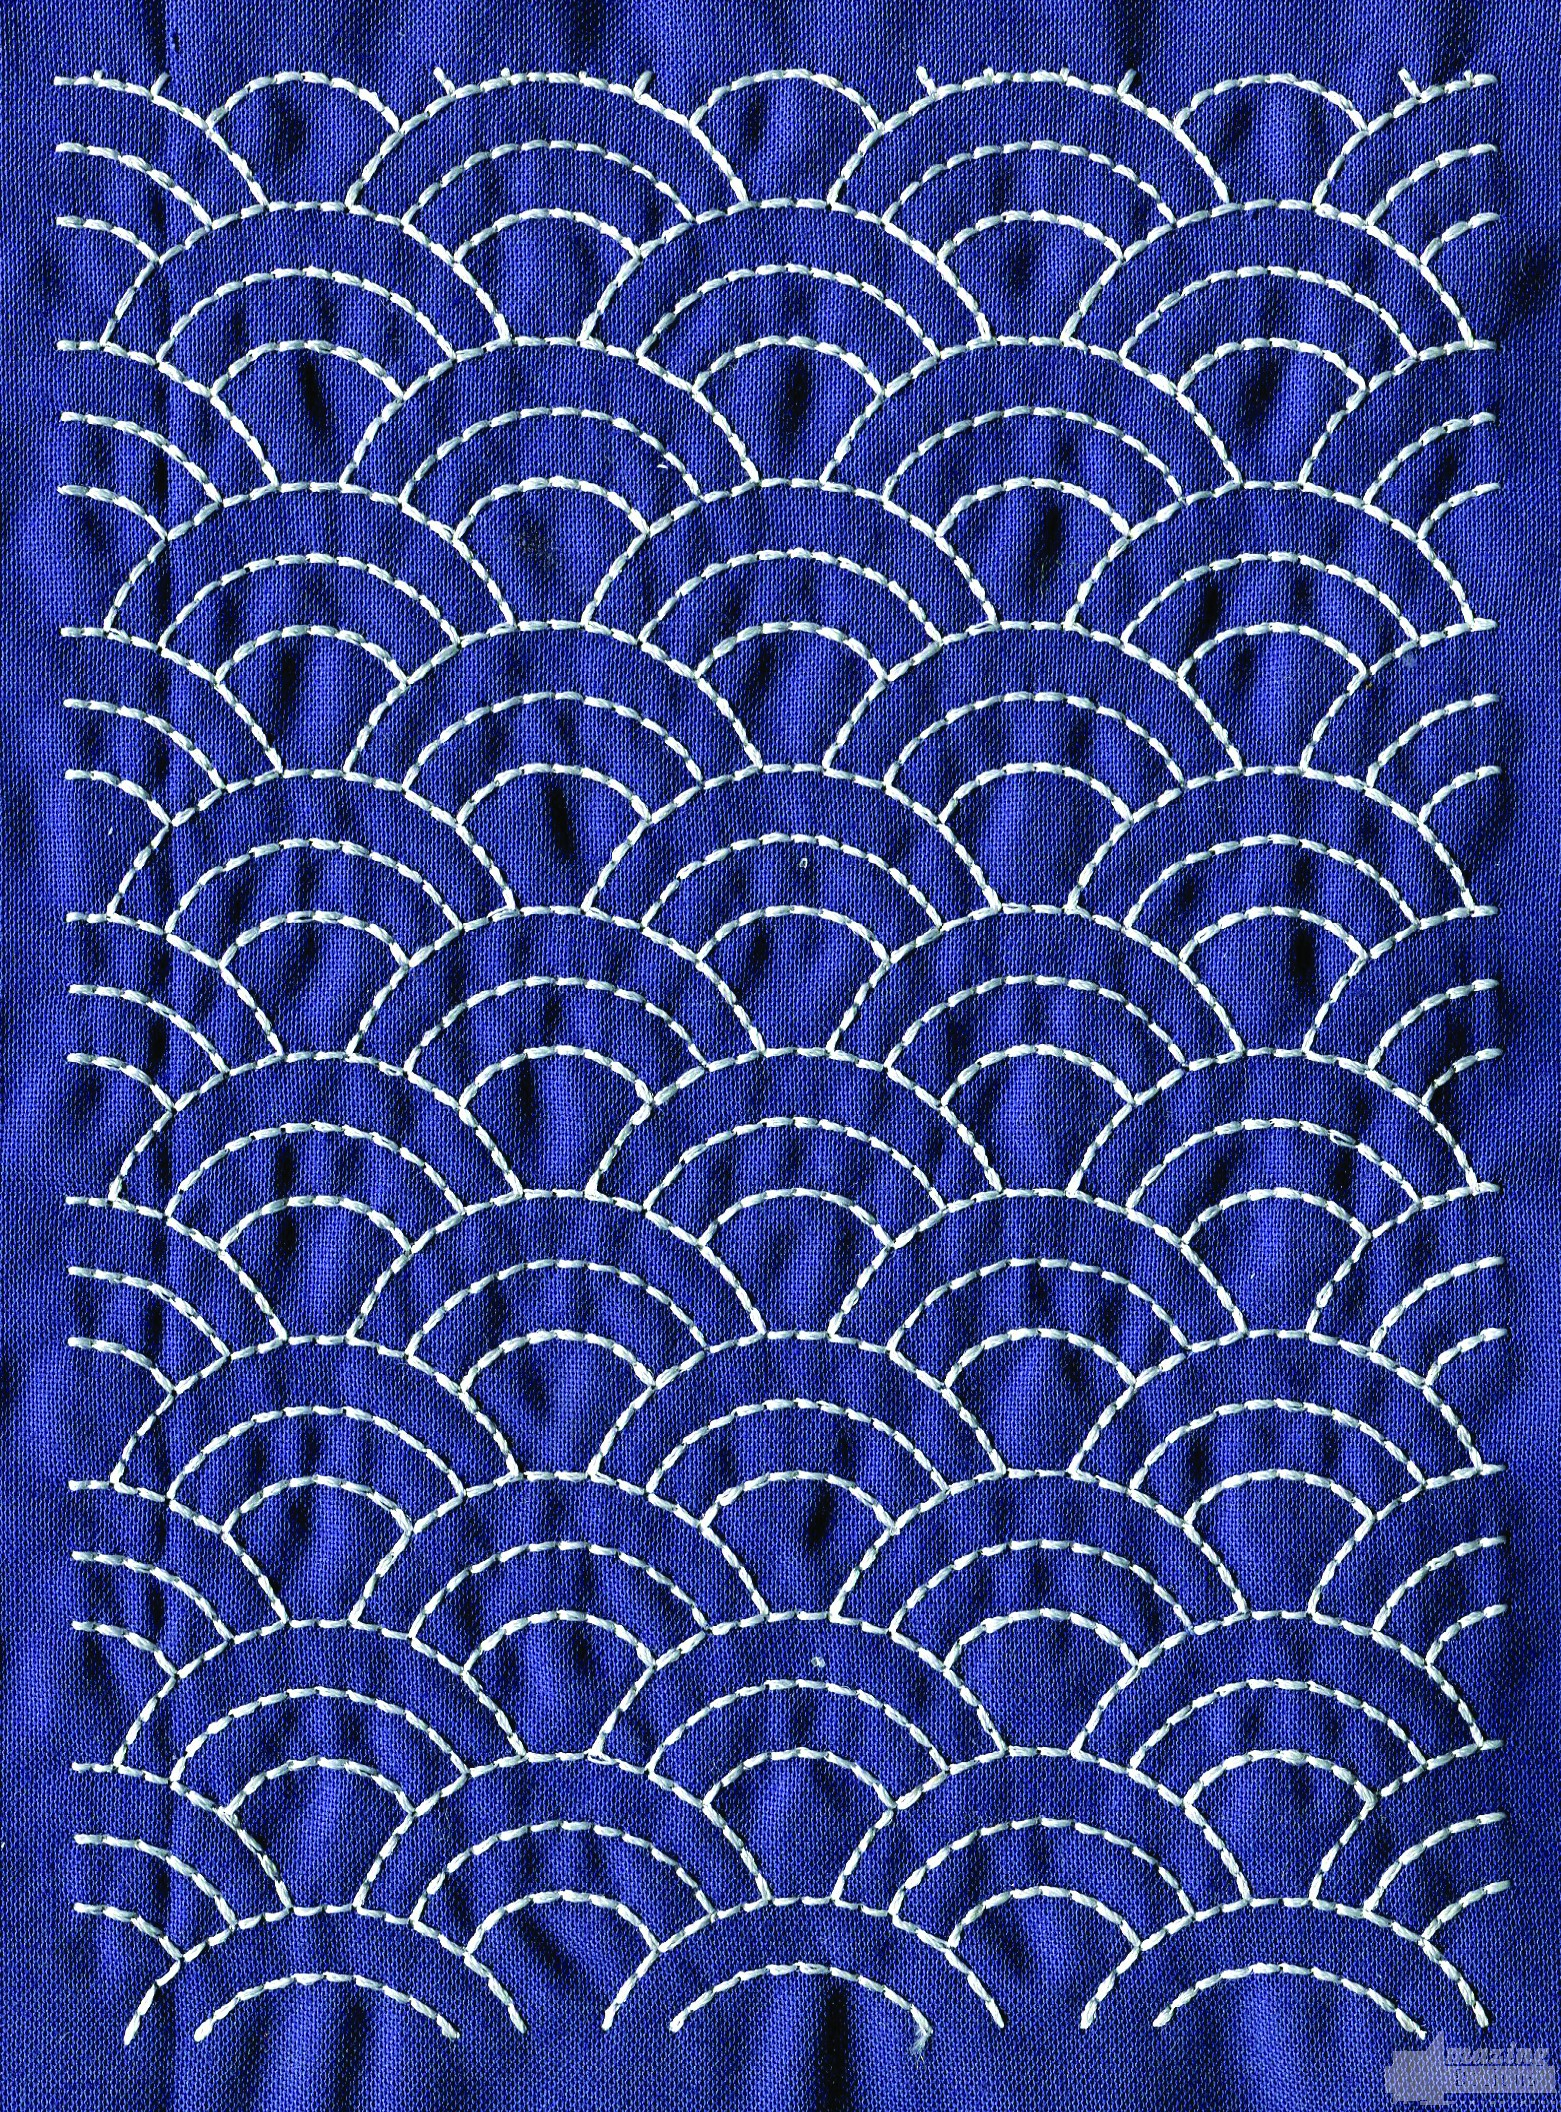 Sashiko Embroidery Patterns Free Sashiko Quilting Patterns Stitch Burberry Diamond Quilted